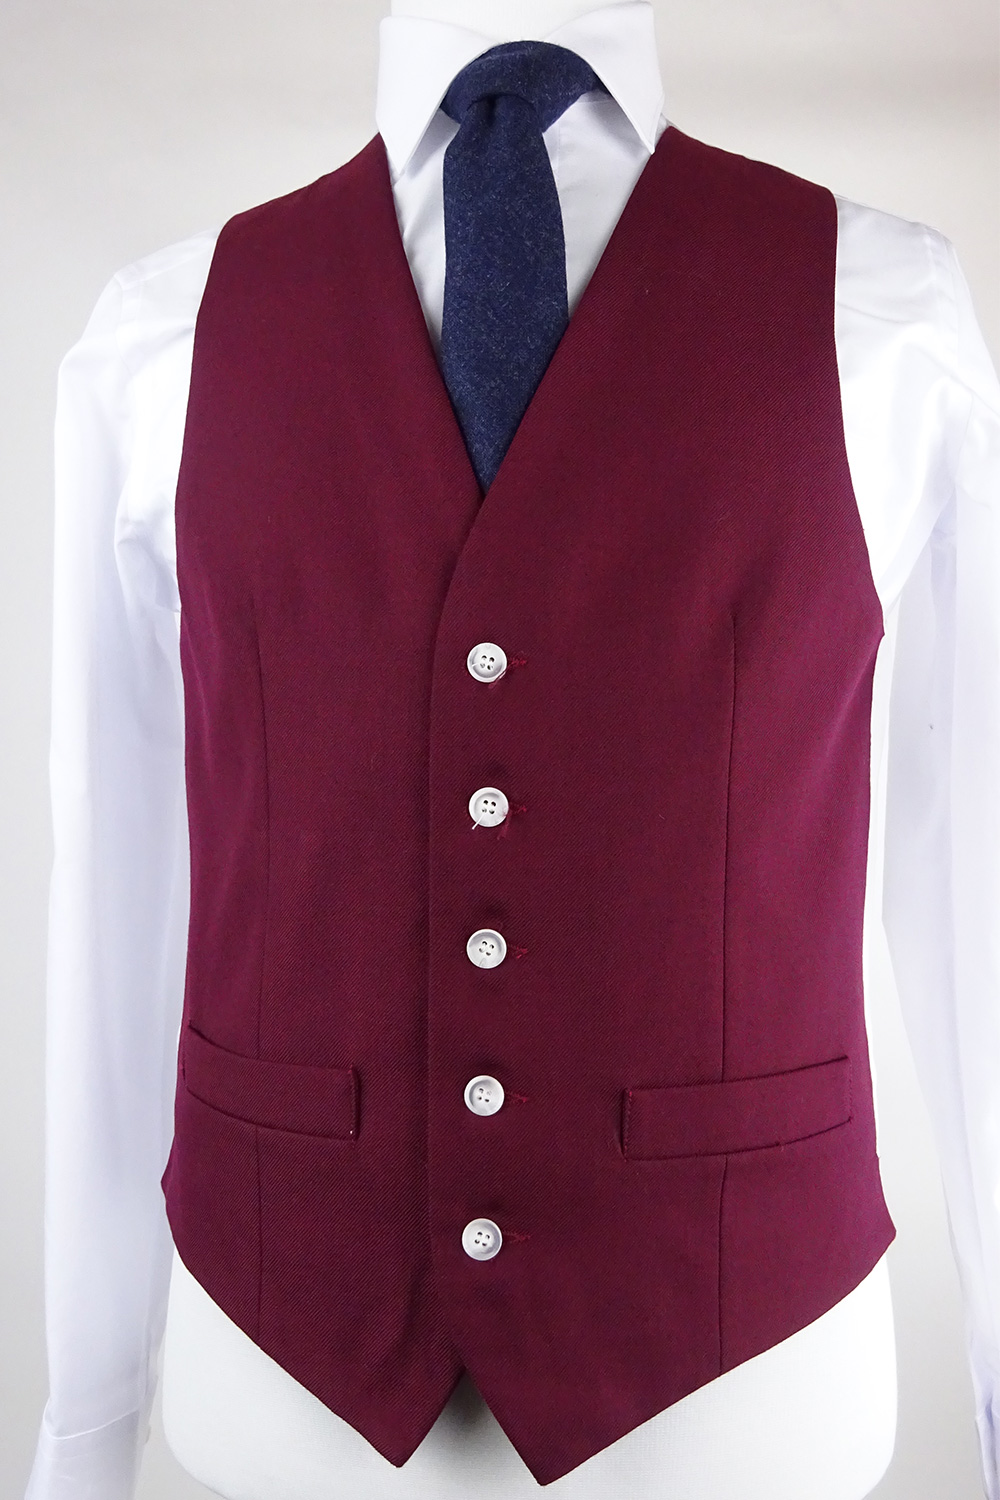 Navy Suit Ascott Waistcoat - Tom Murphy's Formal and Menswear